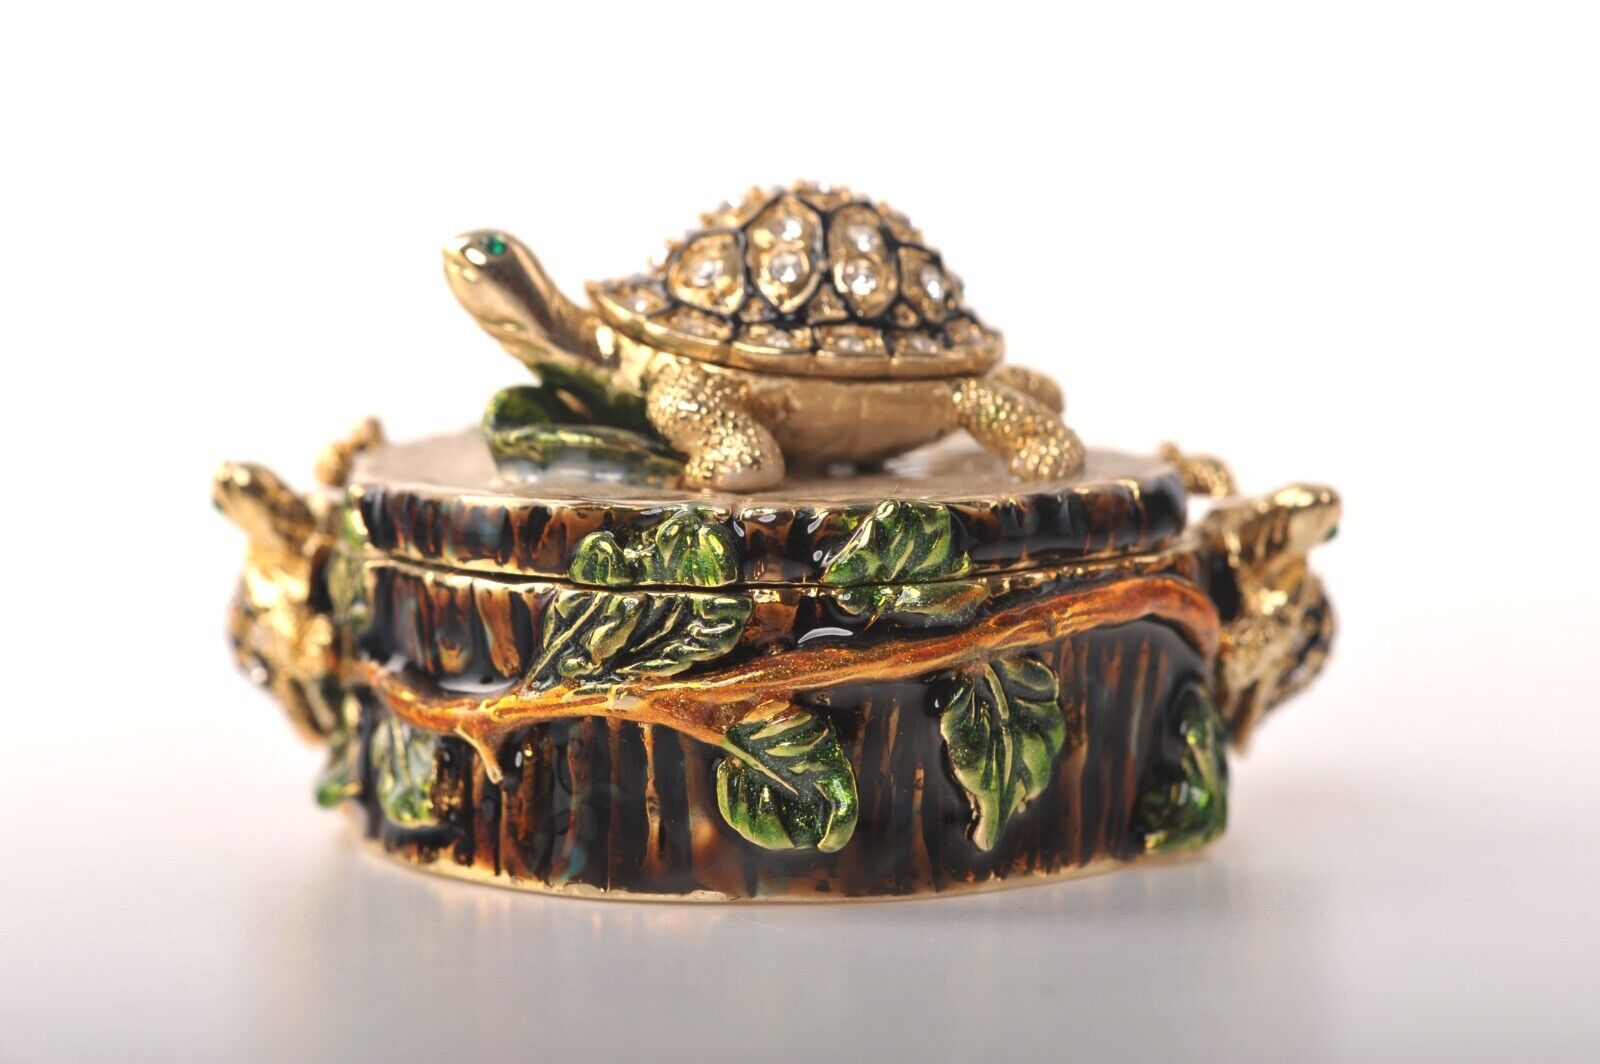 Keren Kopal  Turtles on Tree Trunk Trinket Box Decorated with Austrian Crystals